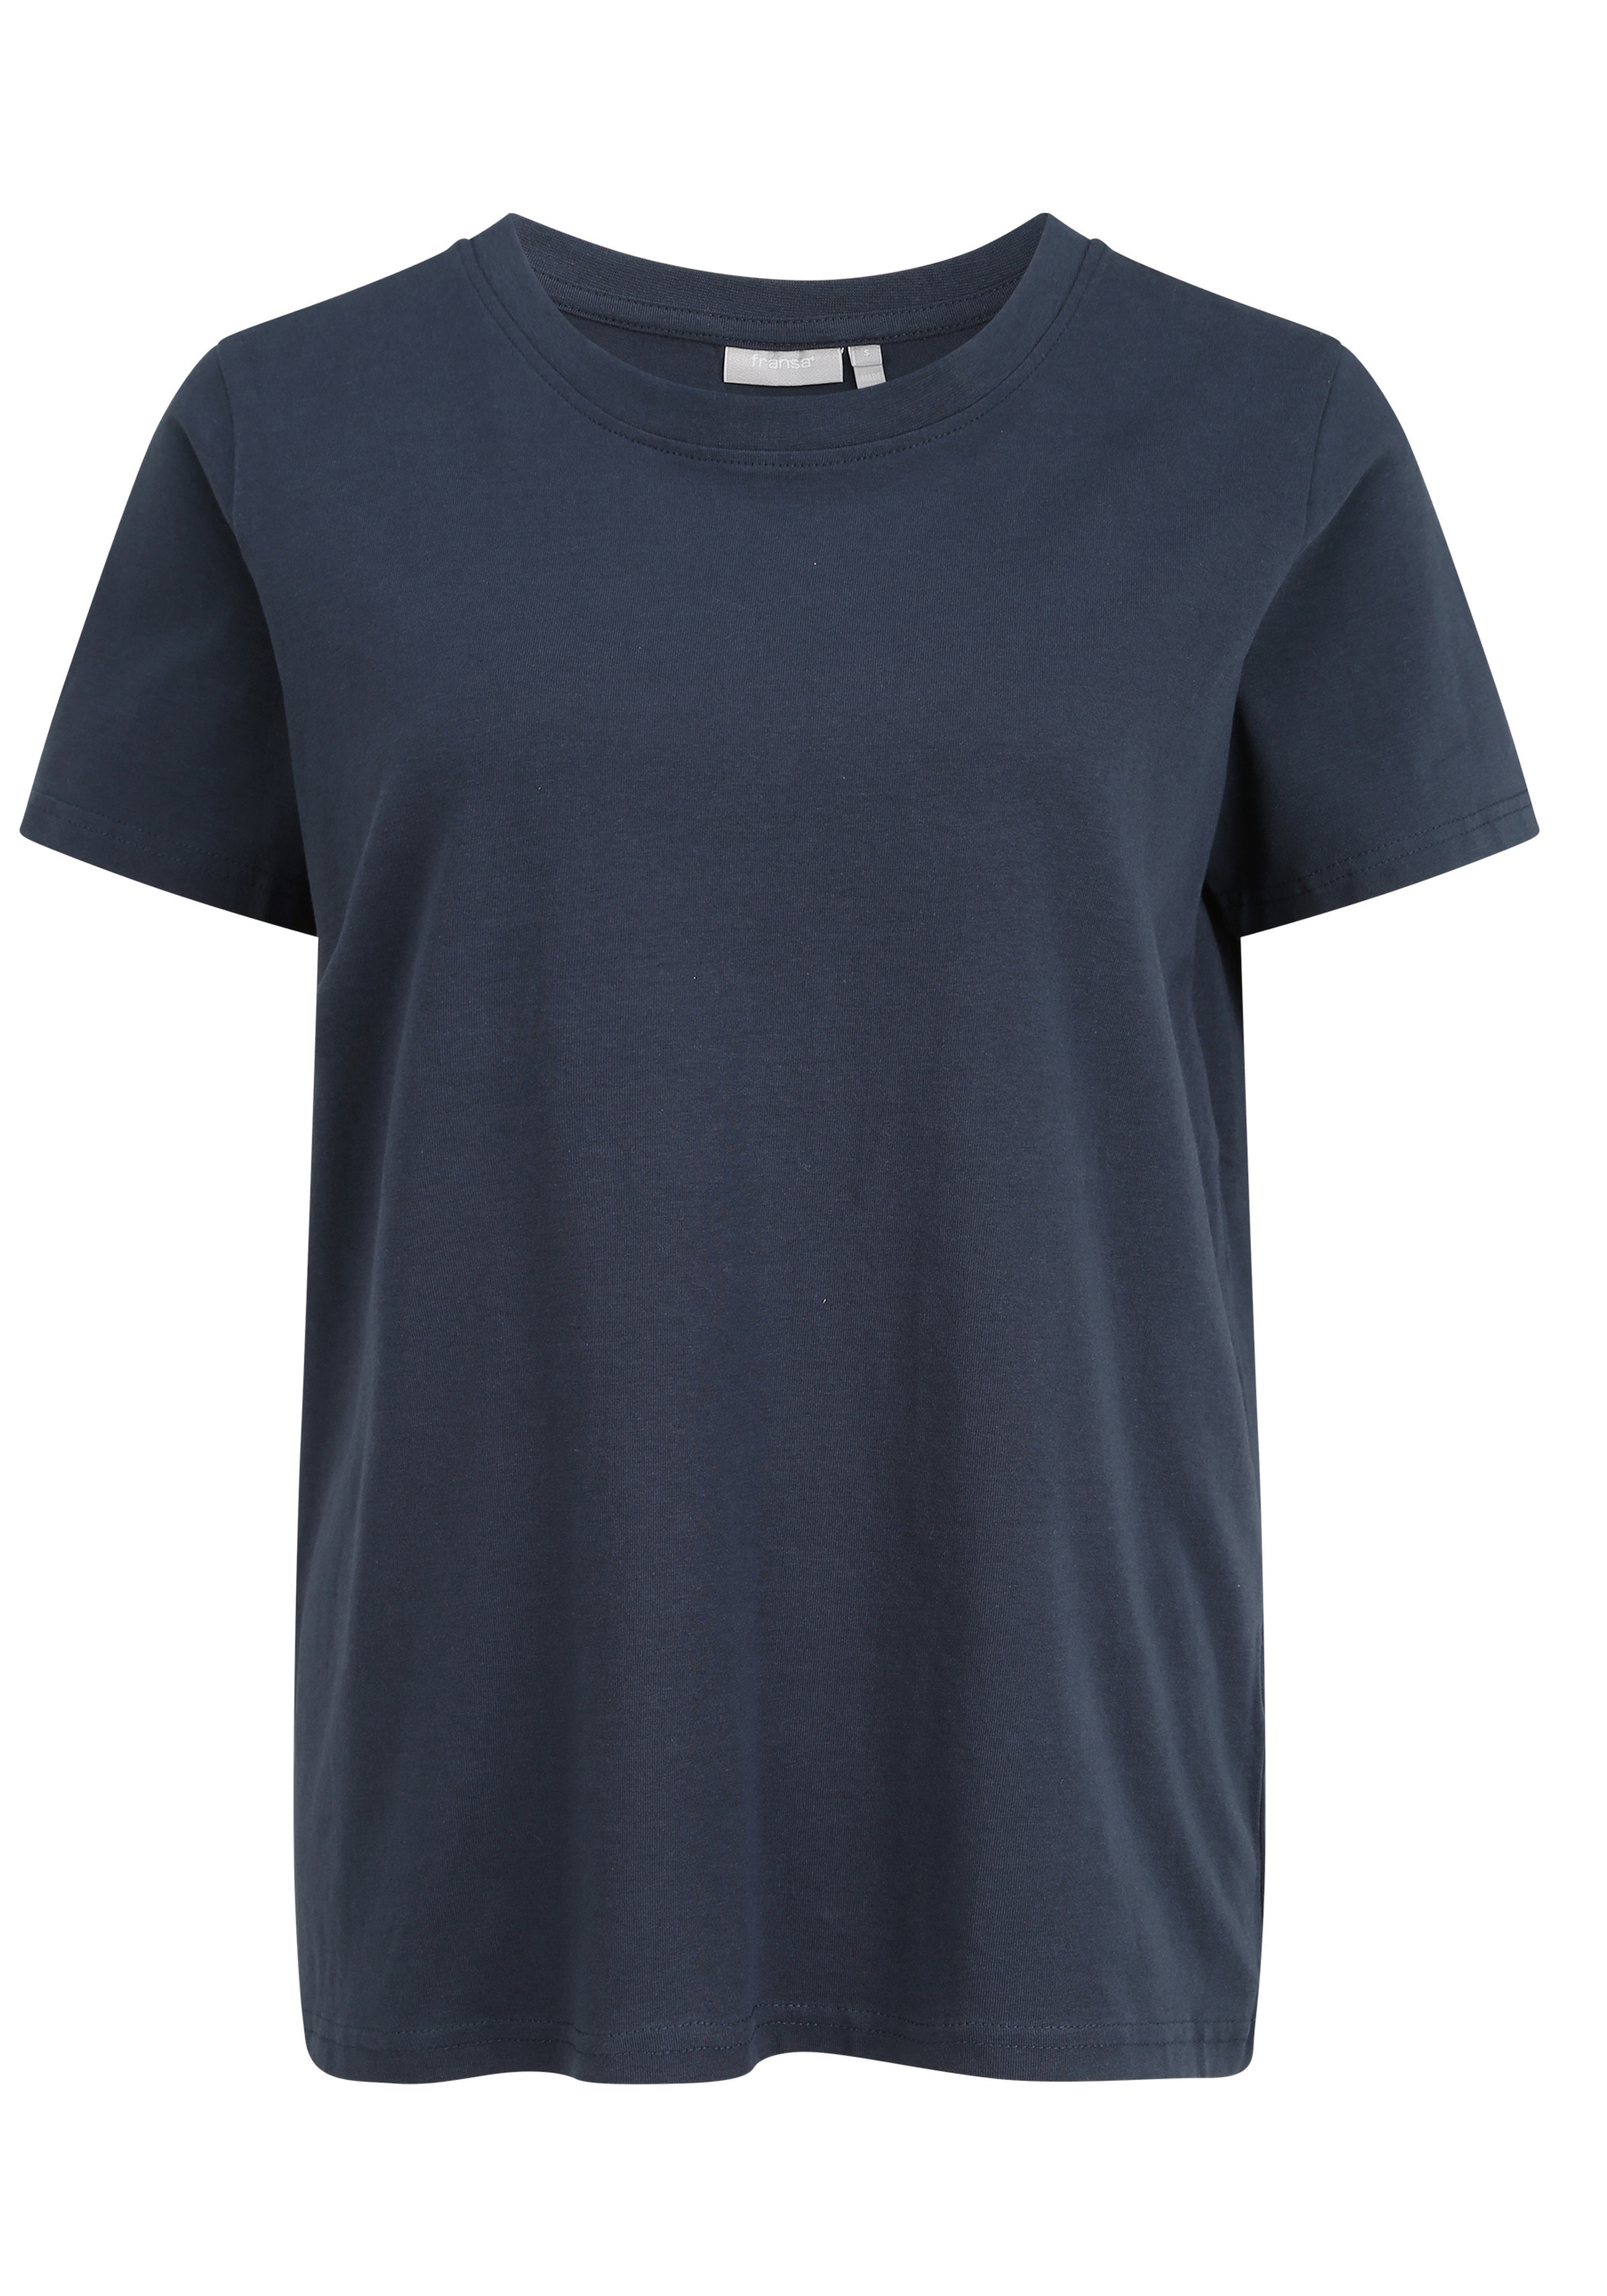 »Fransa | FRZaganic fransa - T-shirt 2 20603462« für T-Shirt BAUR kaufen